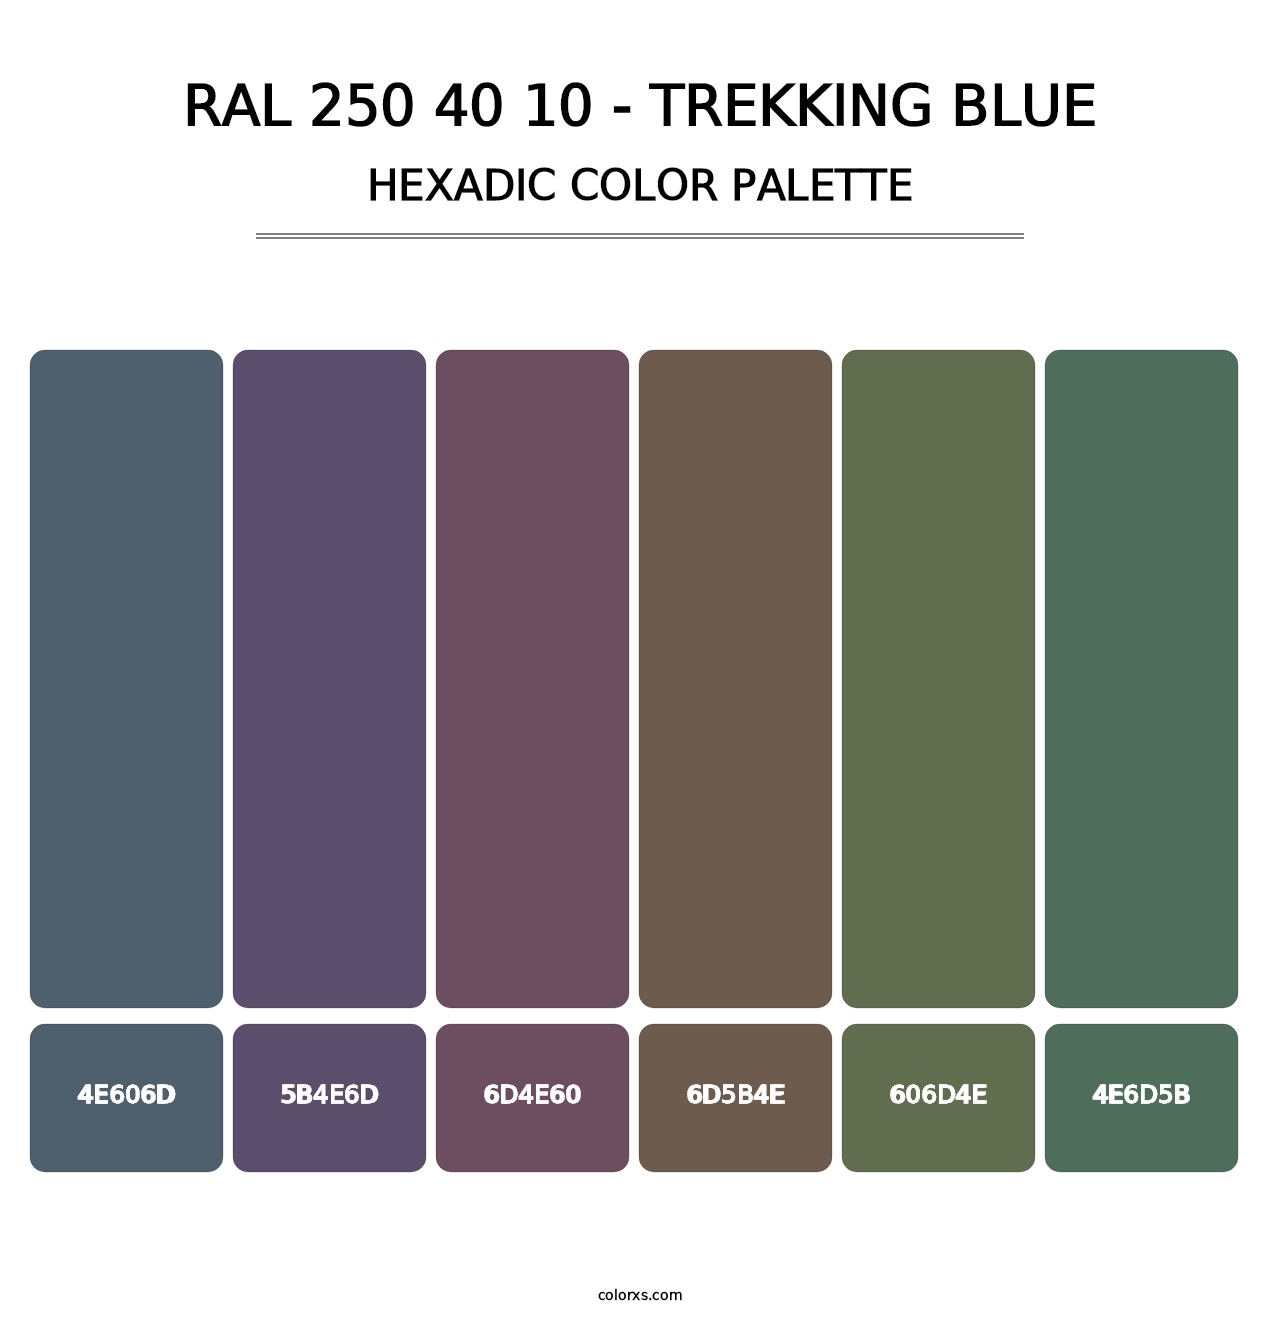 RAL 250 40 10 - Trekking Blue - Hexadic Color Palette